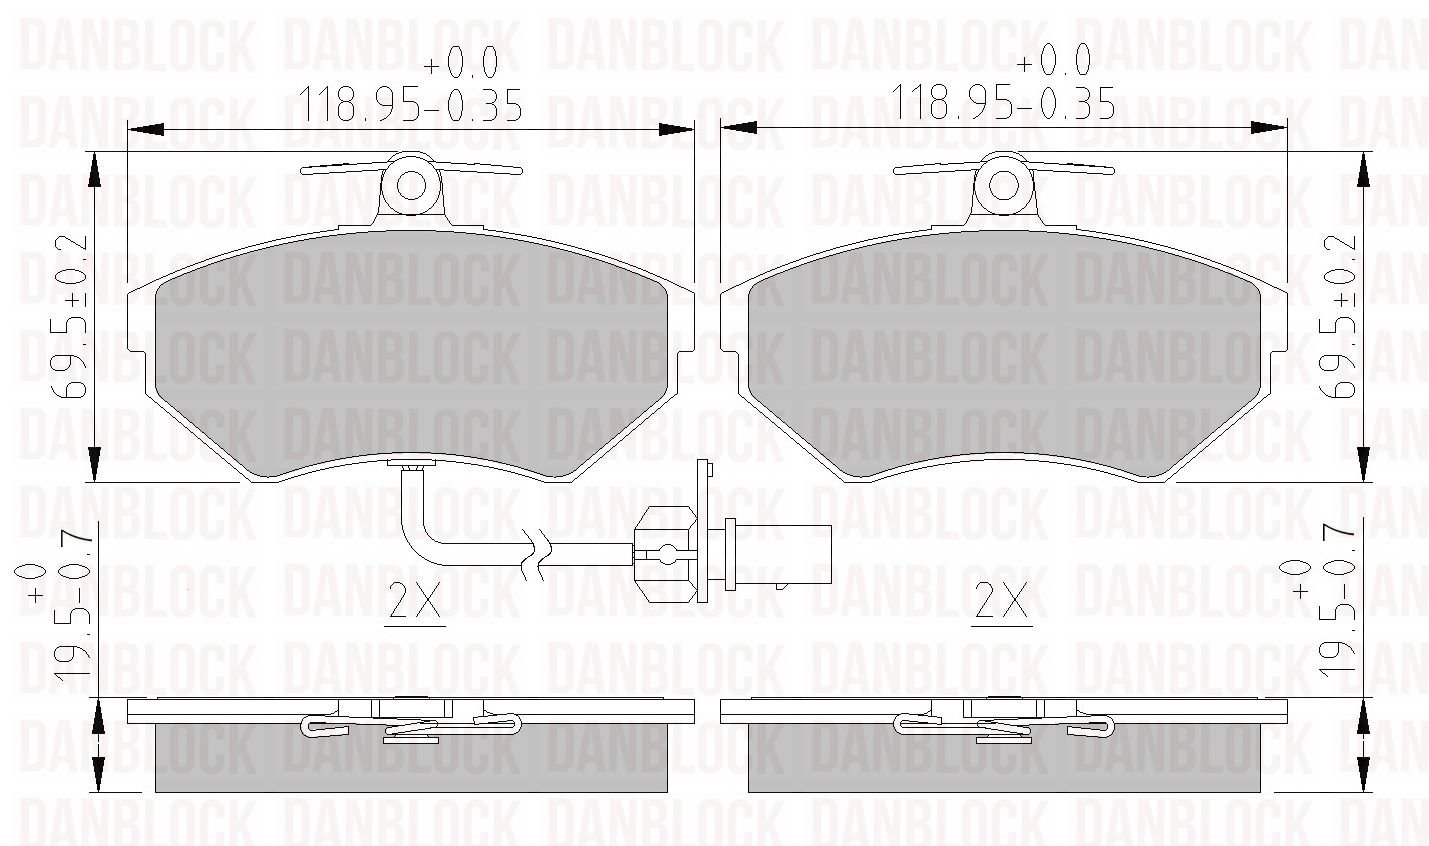 DANBLOCK DB 510391